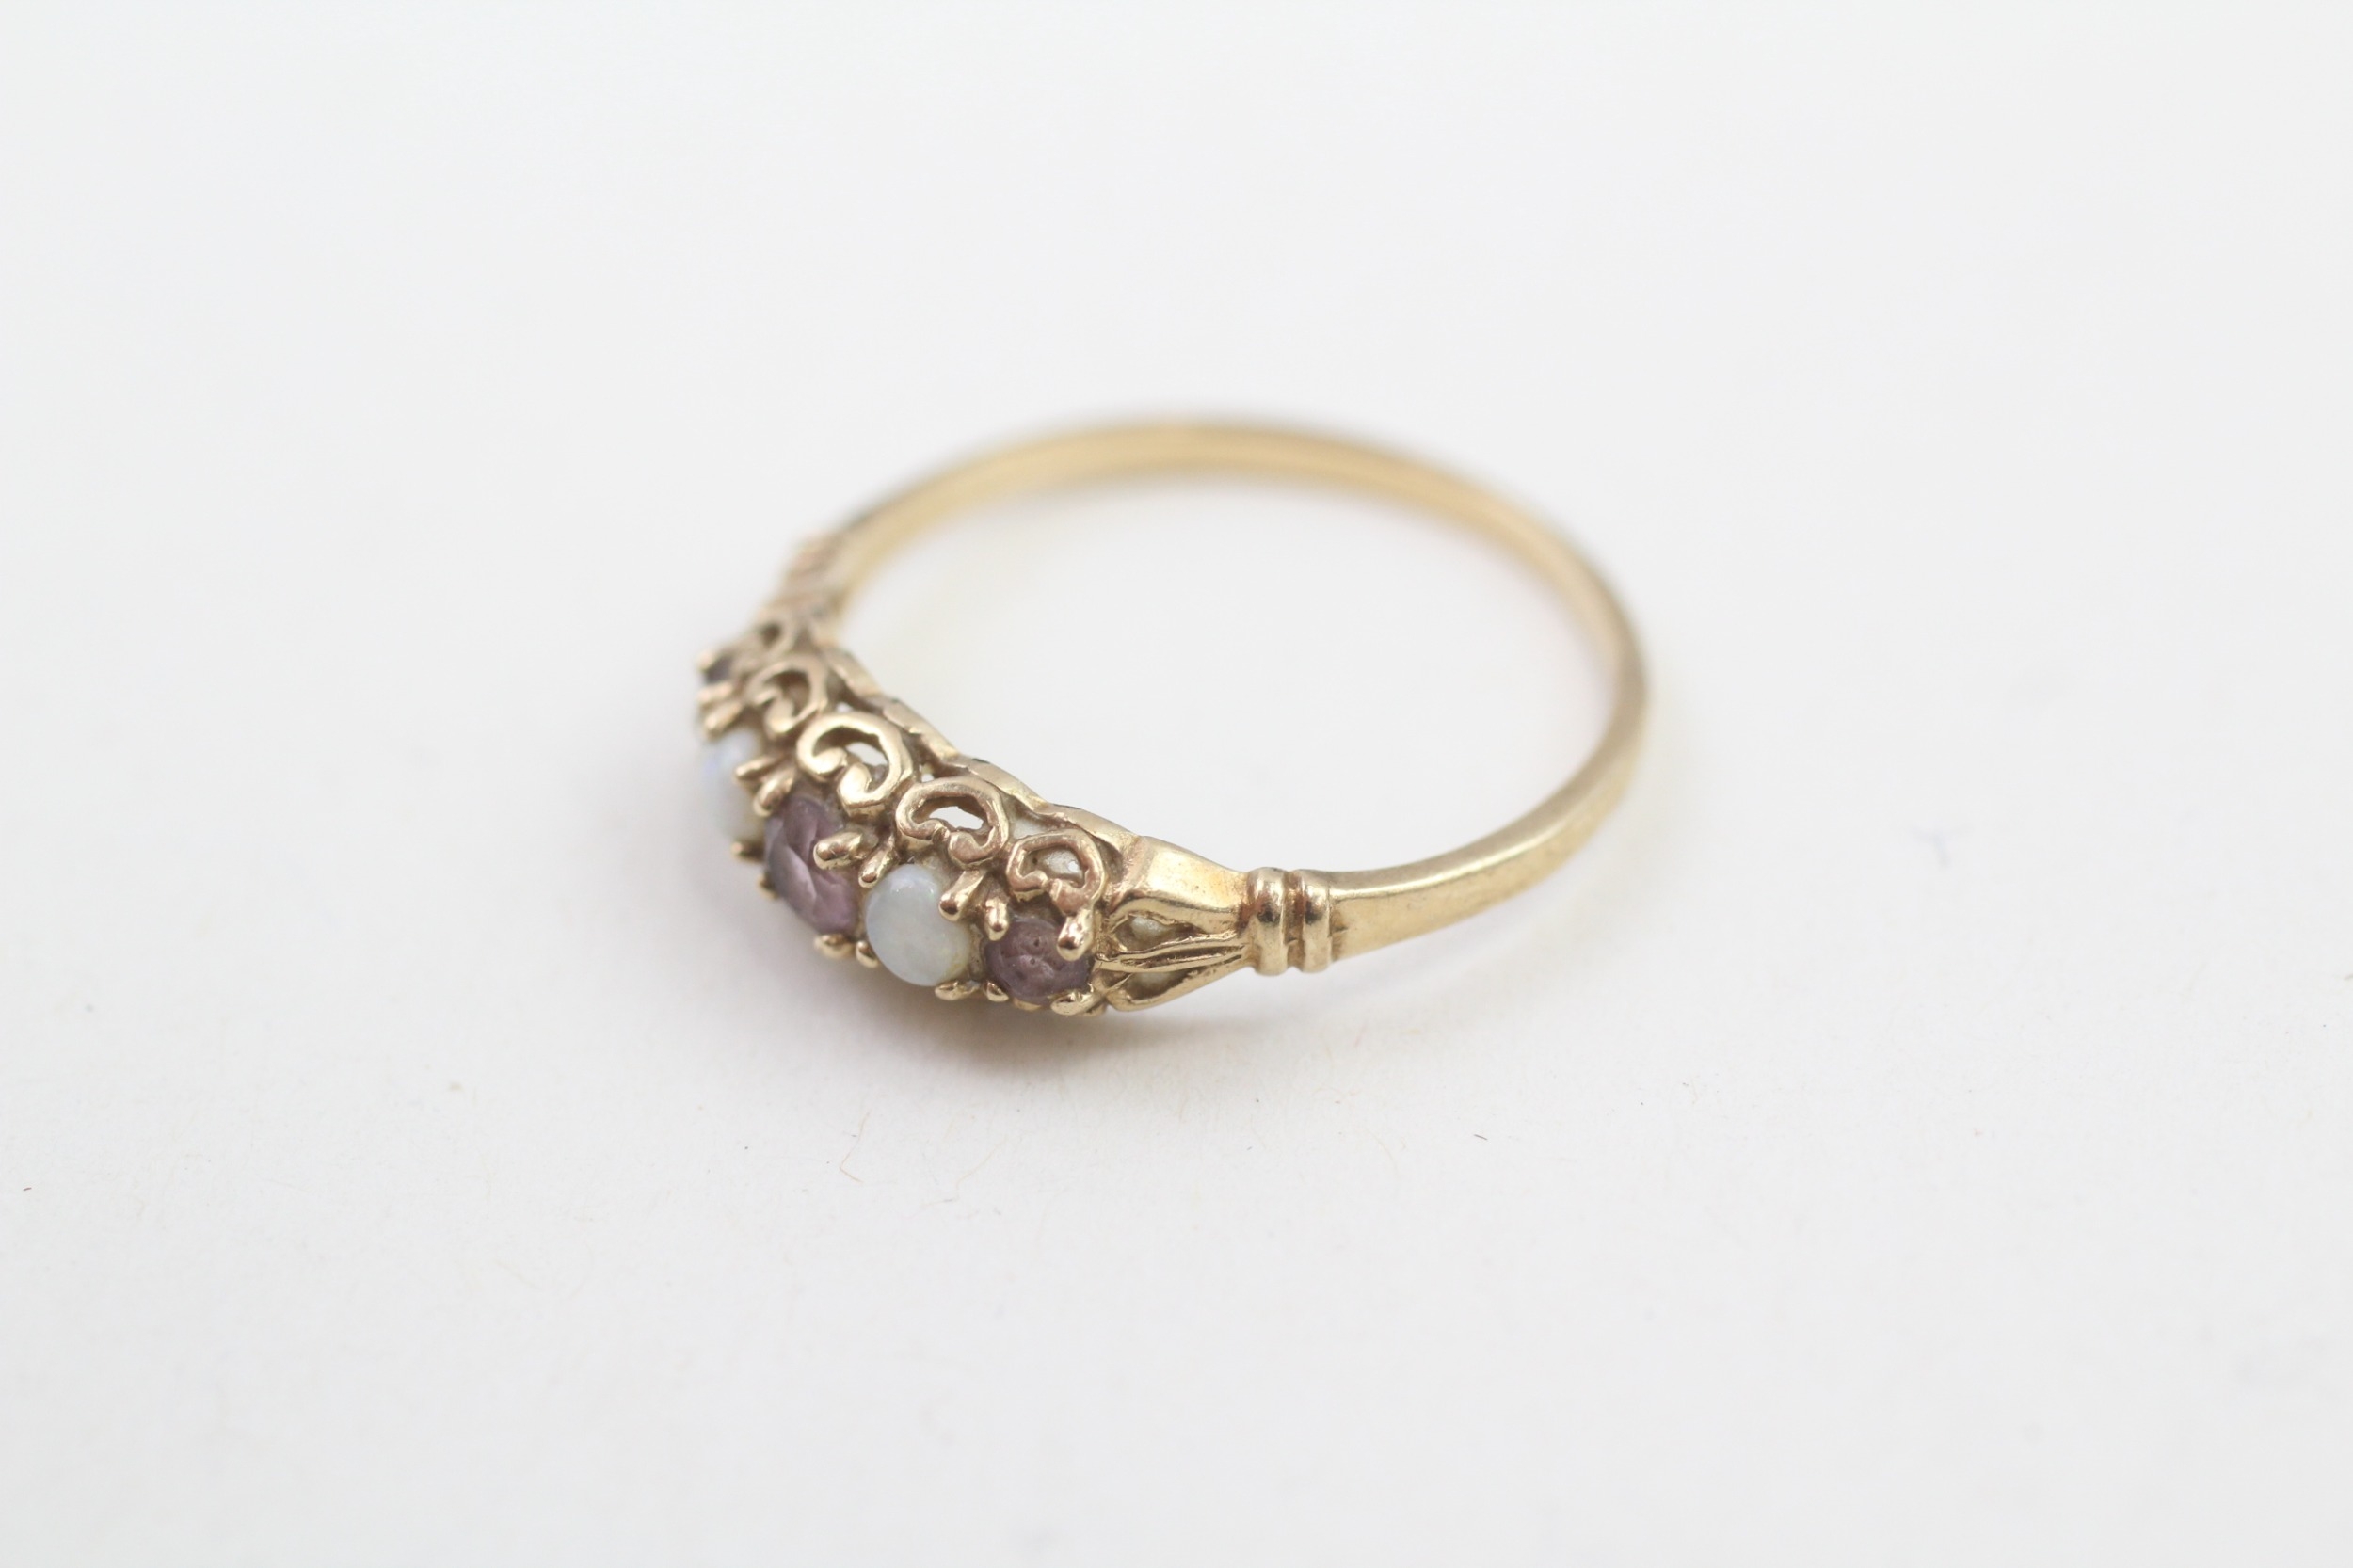 9ct gold purple & white gemstone ring (1.3g) - Image 2 of 5